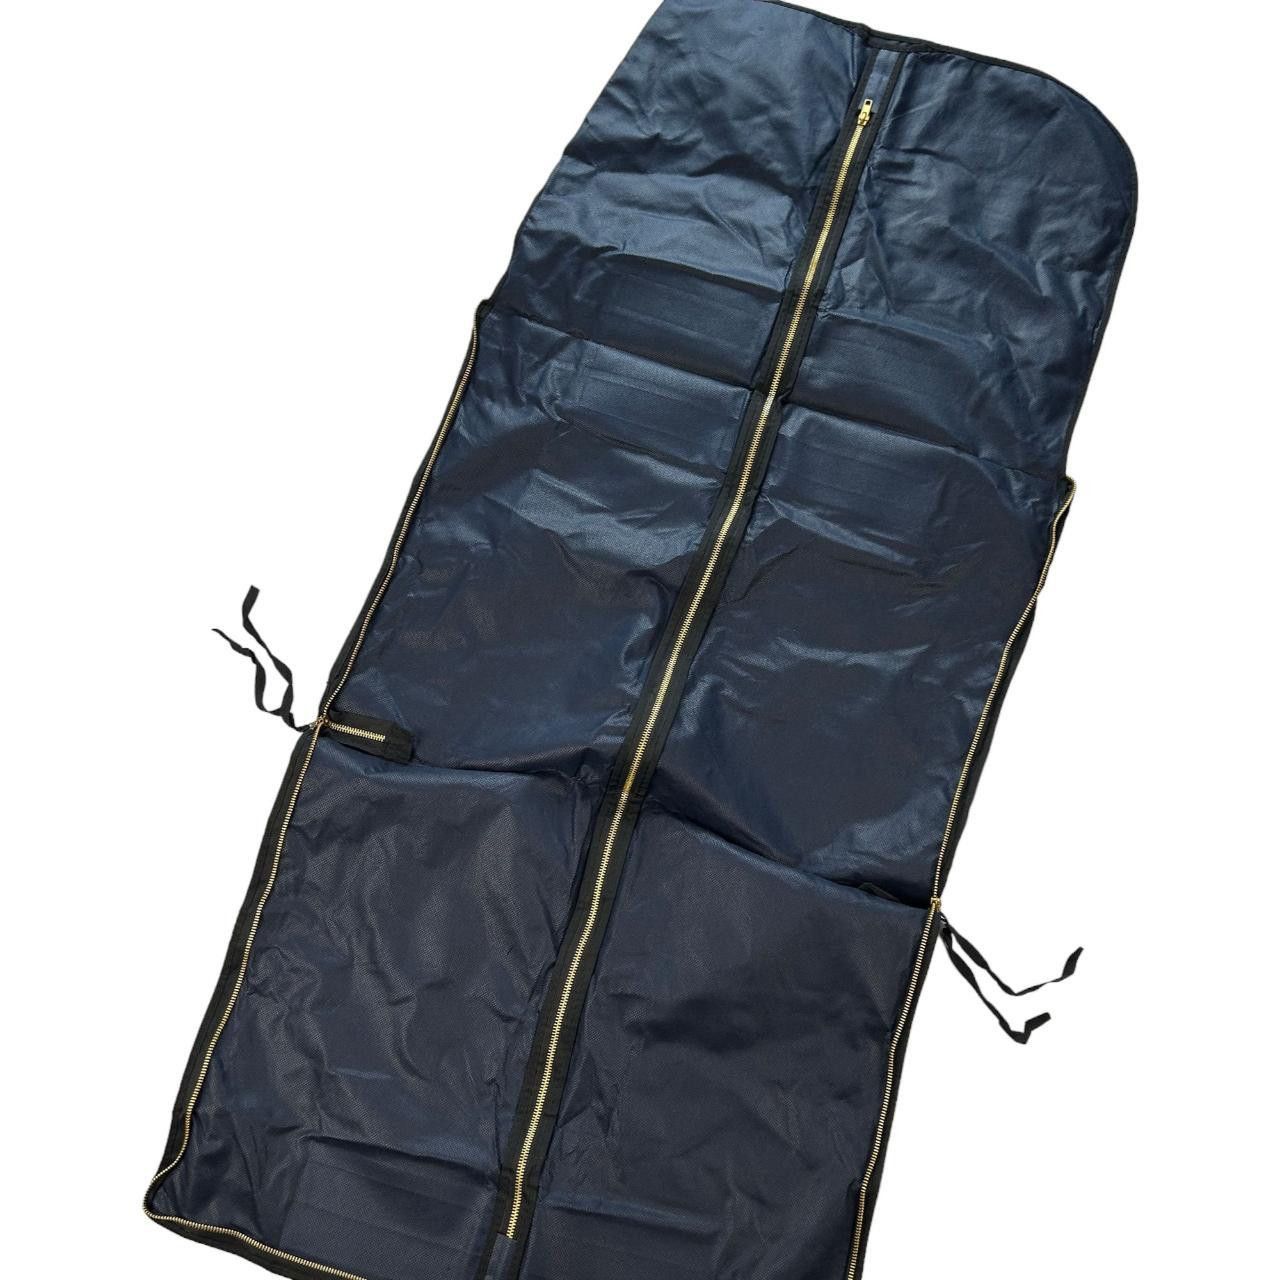 Sacai Vintage Sacai The North Face Collaboration Suit Dress Bag Size ONE SIZE - 6 Thumbnail